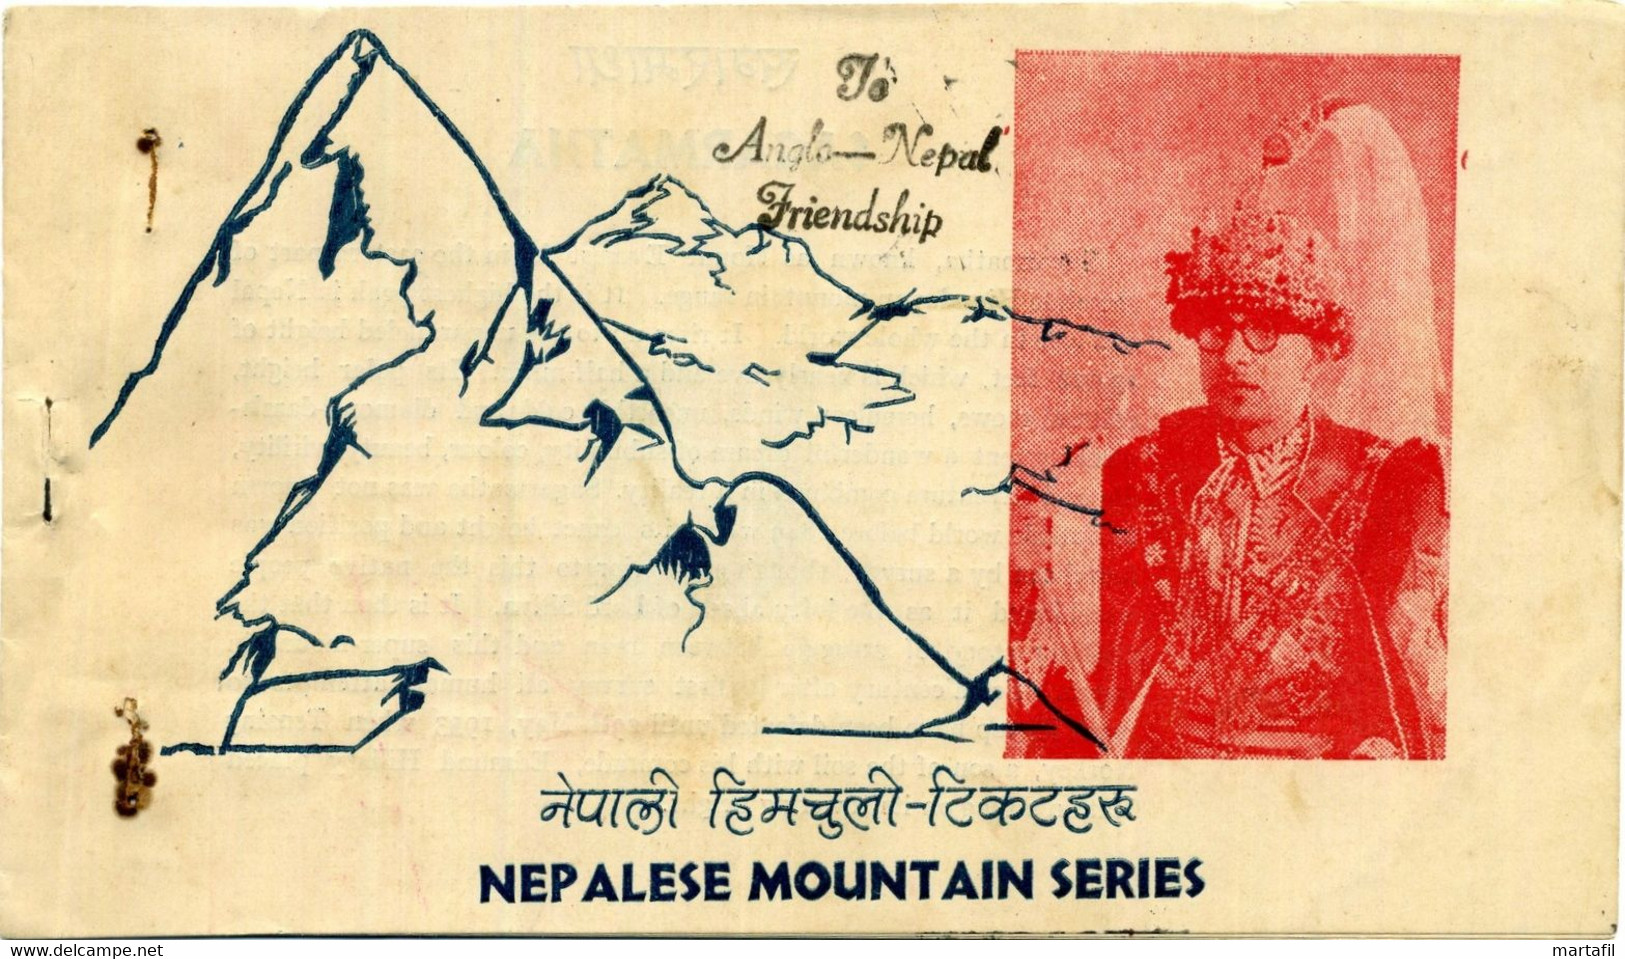 NEPAL Booklet "Nepalese Mountain Series" Anglo-Nepal Friendship (SAGARMATHA - MACHHAPUCHHRE - MANSALU) - Nepal